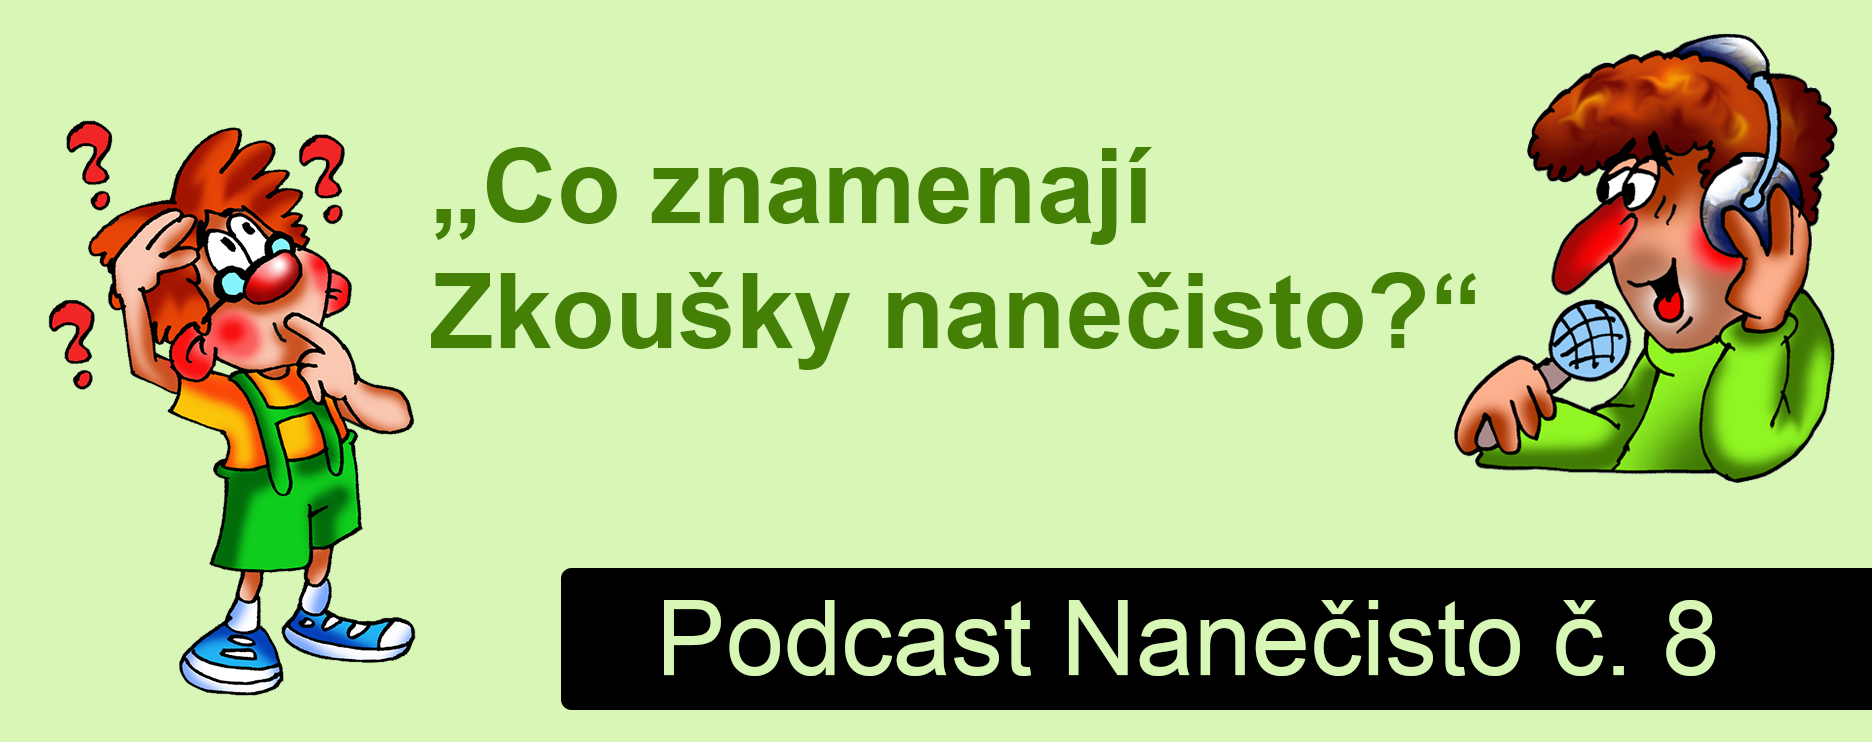 Podcast Nanečisto 8. epizoda